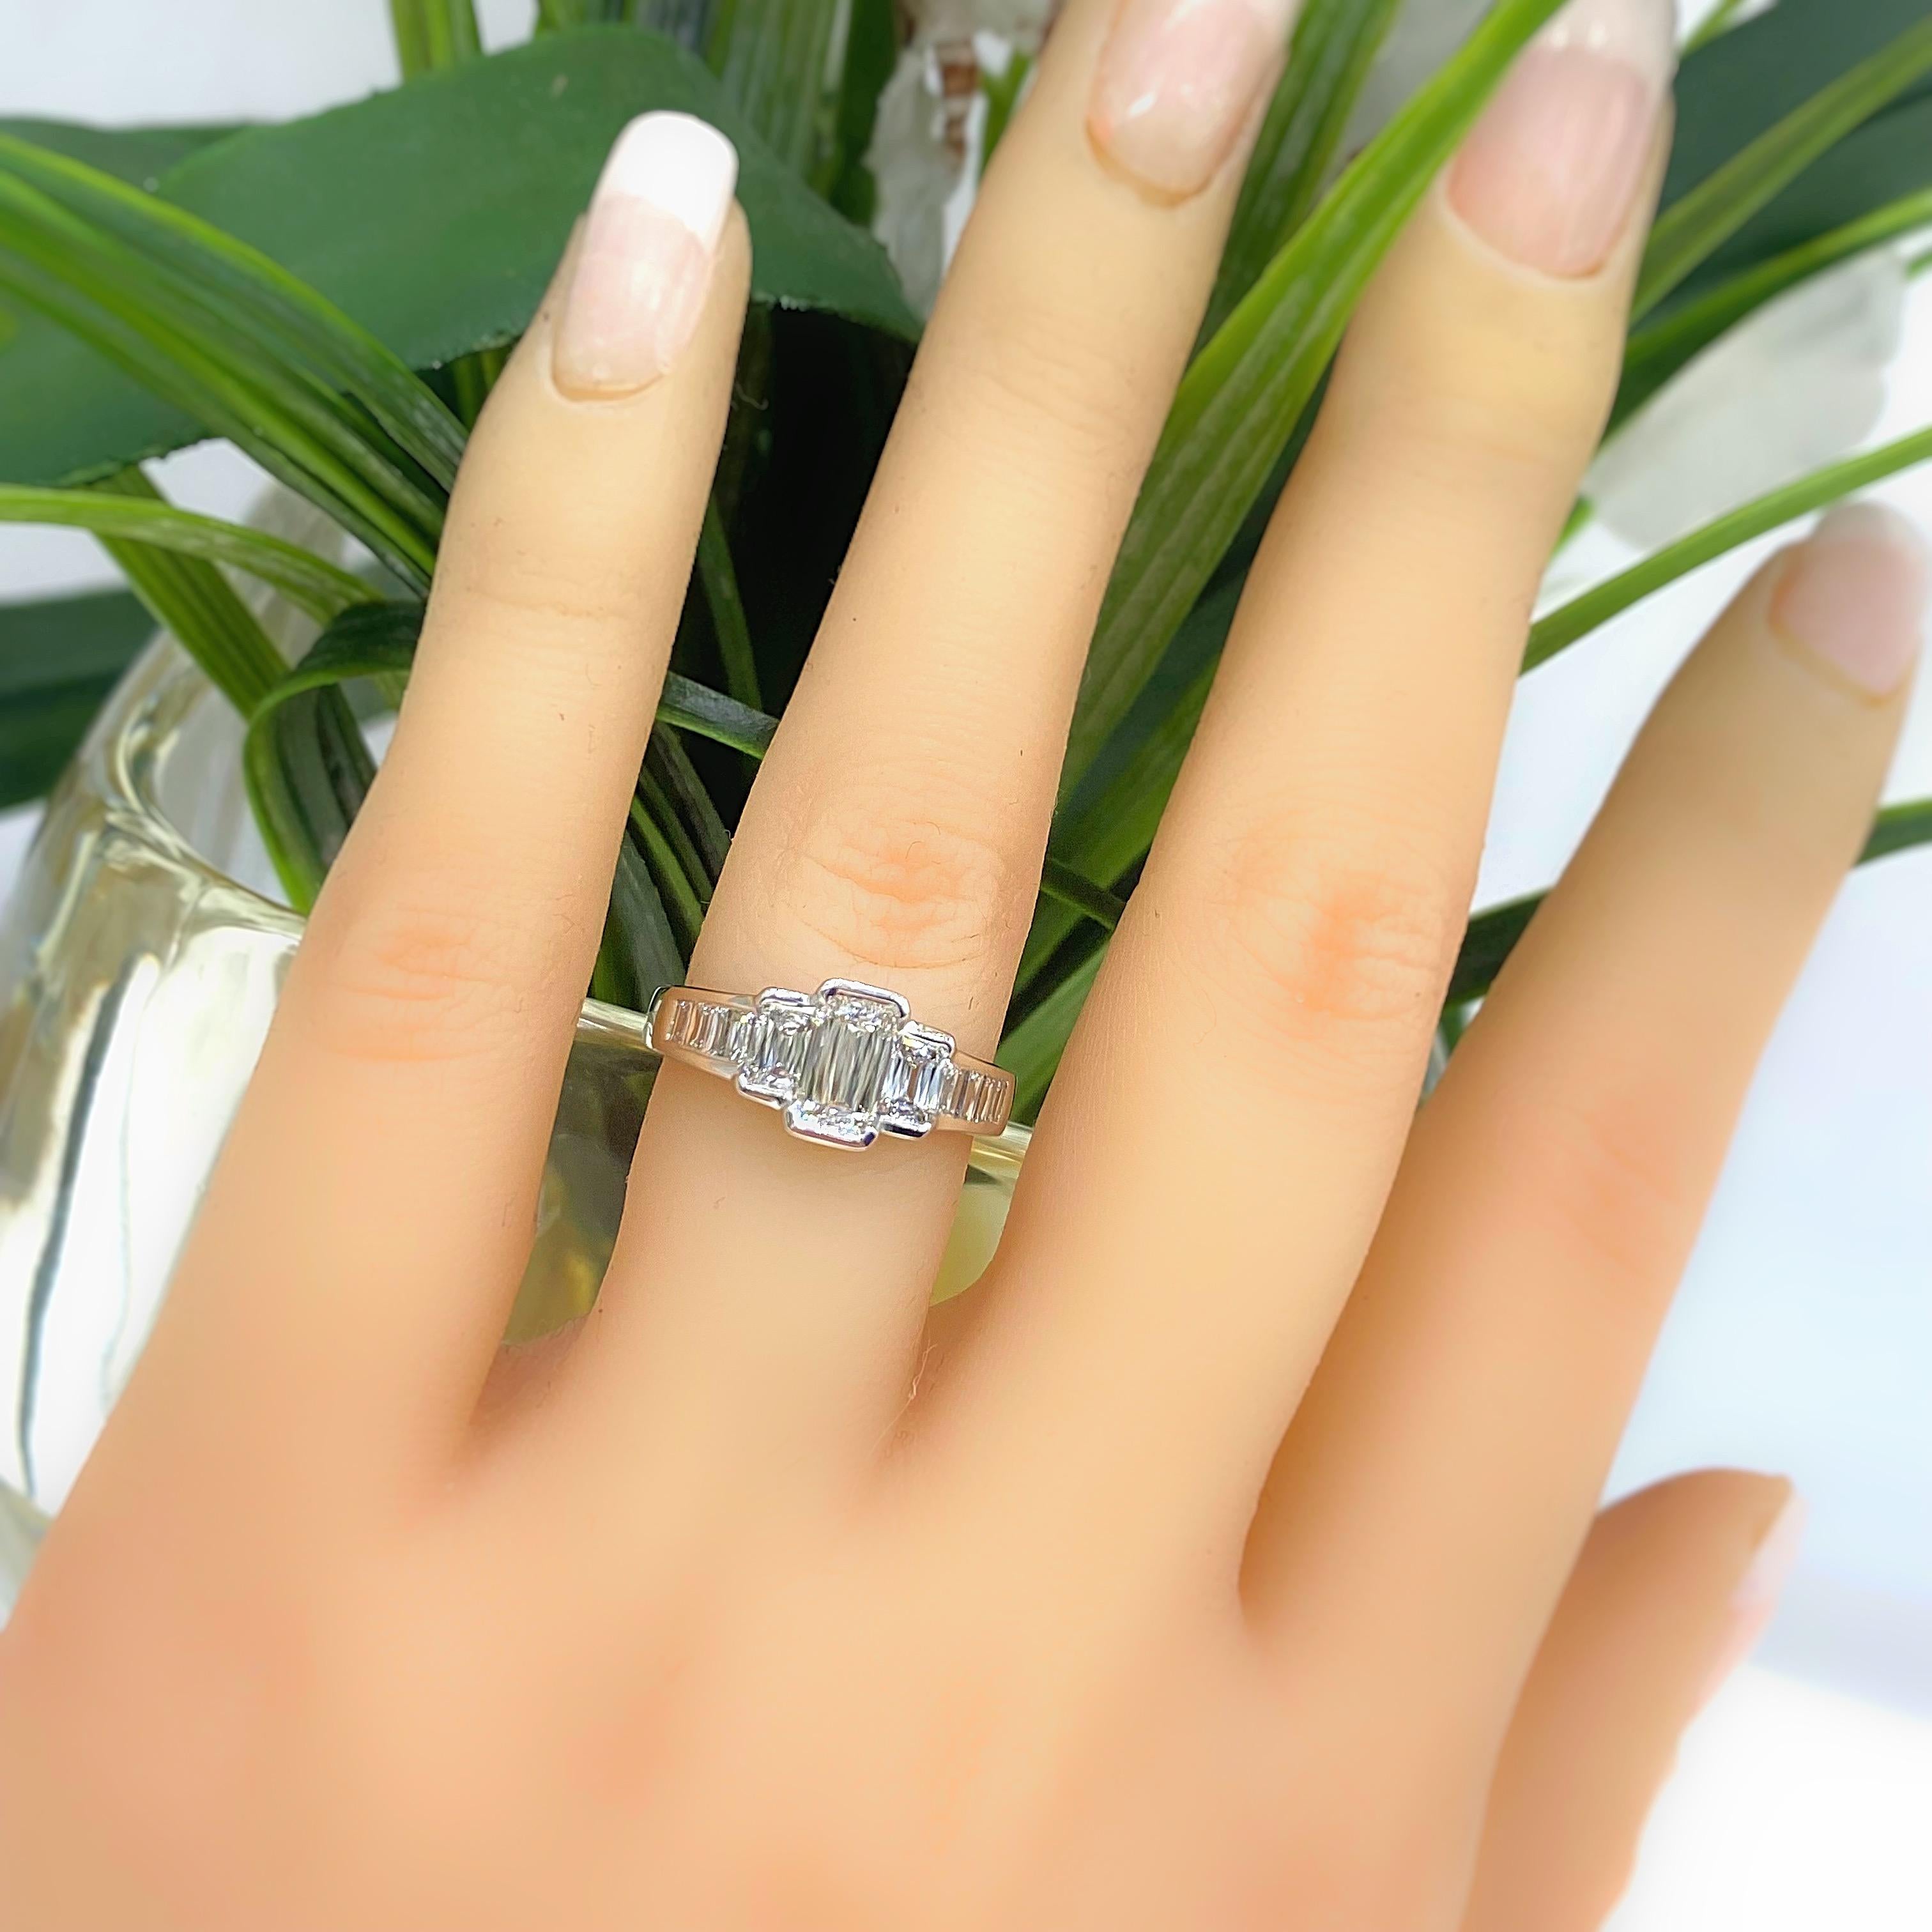 Christopher Designs CRISSCUT Diamond L'Amour Engagement Ring
Style:  Bezel Set
Style Number:  L106-100
Metal:  18kt White Gold
Size:  6.25 sizable
TCW:  1.75 tcw
Main Diamond:  Crisscut Diamond ( Emerald Cut ) 0.75 cts
Color & Clarity:  G - H, VS1 -